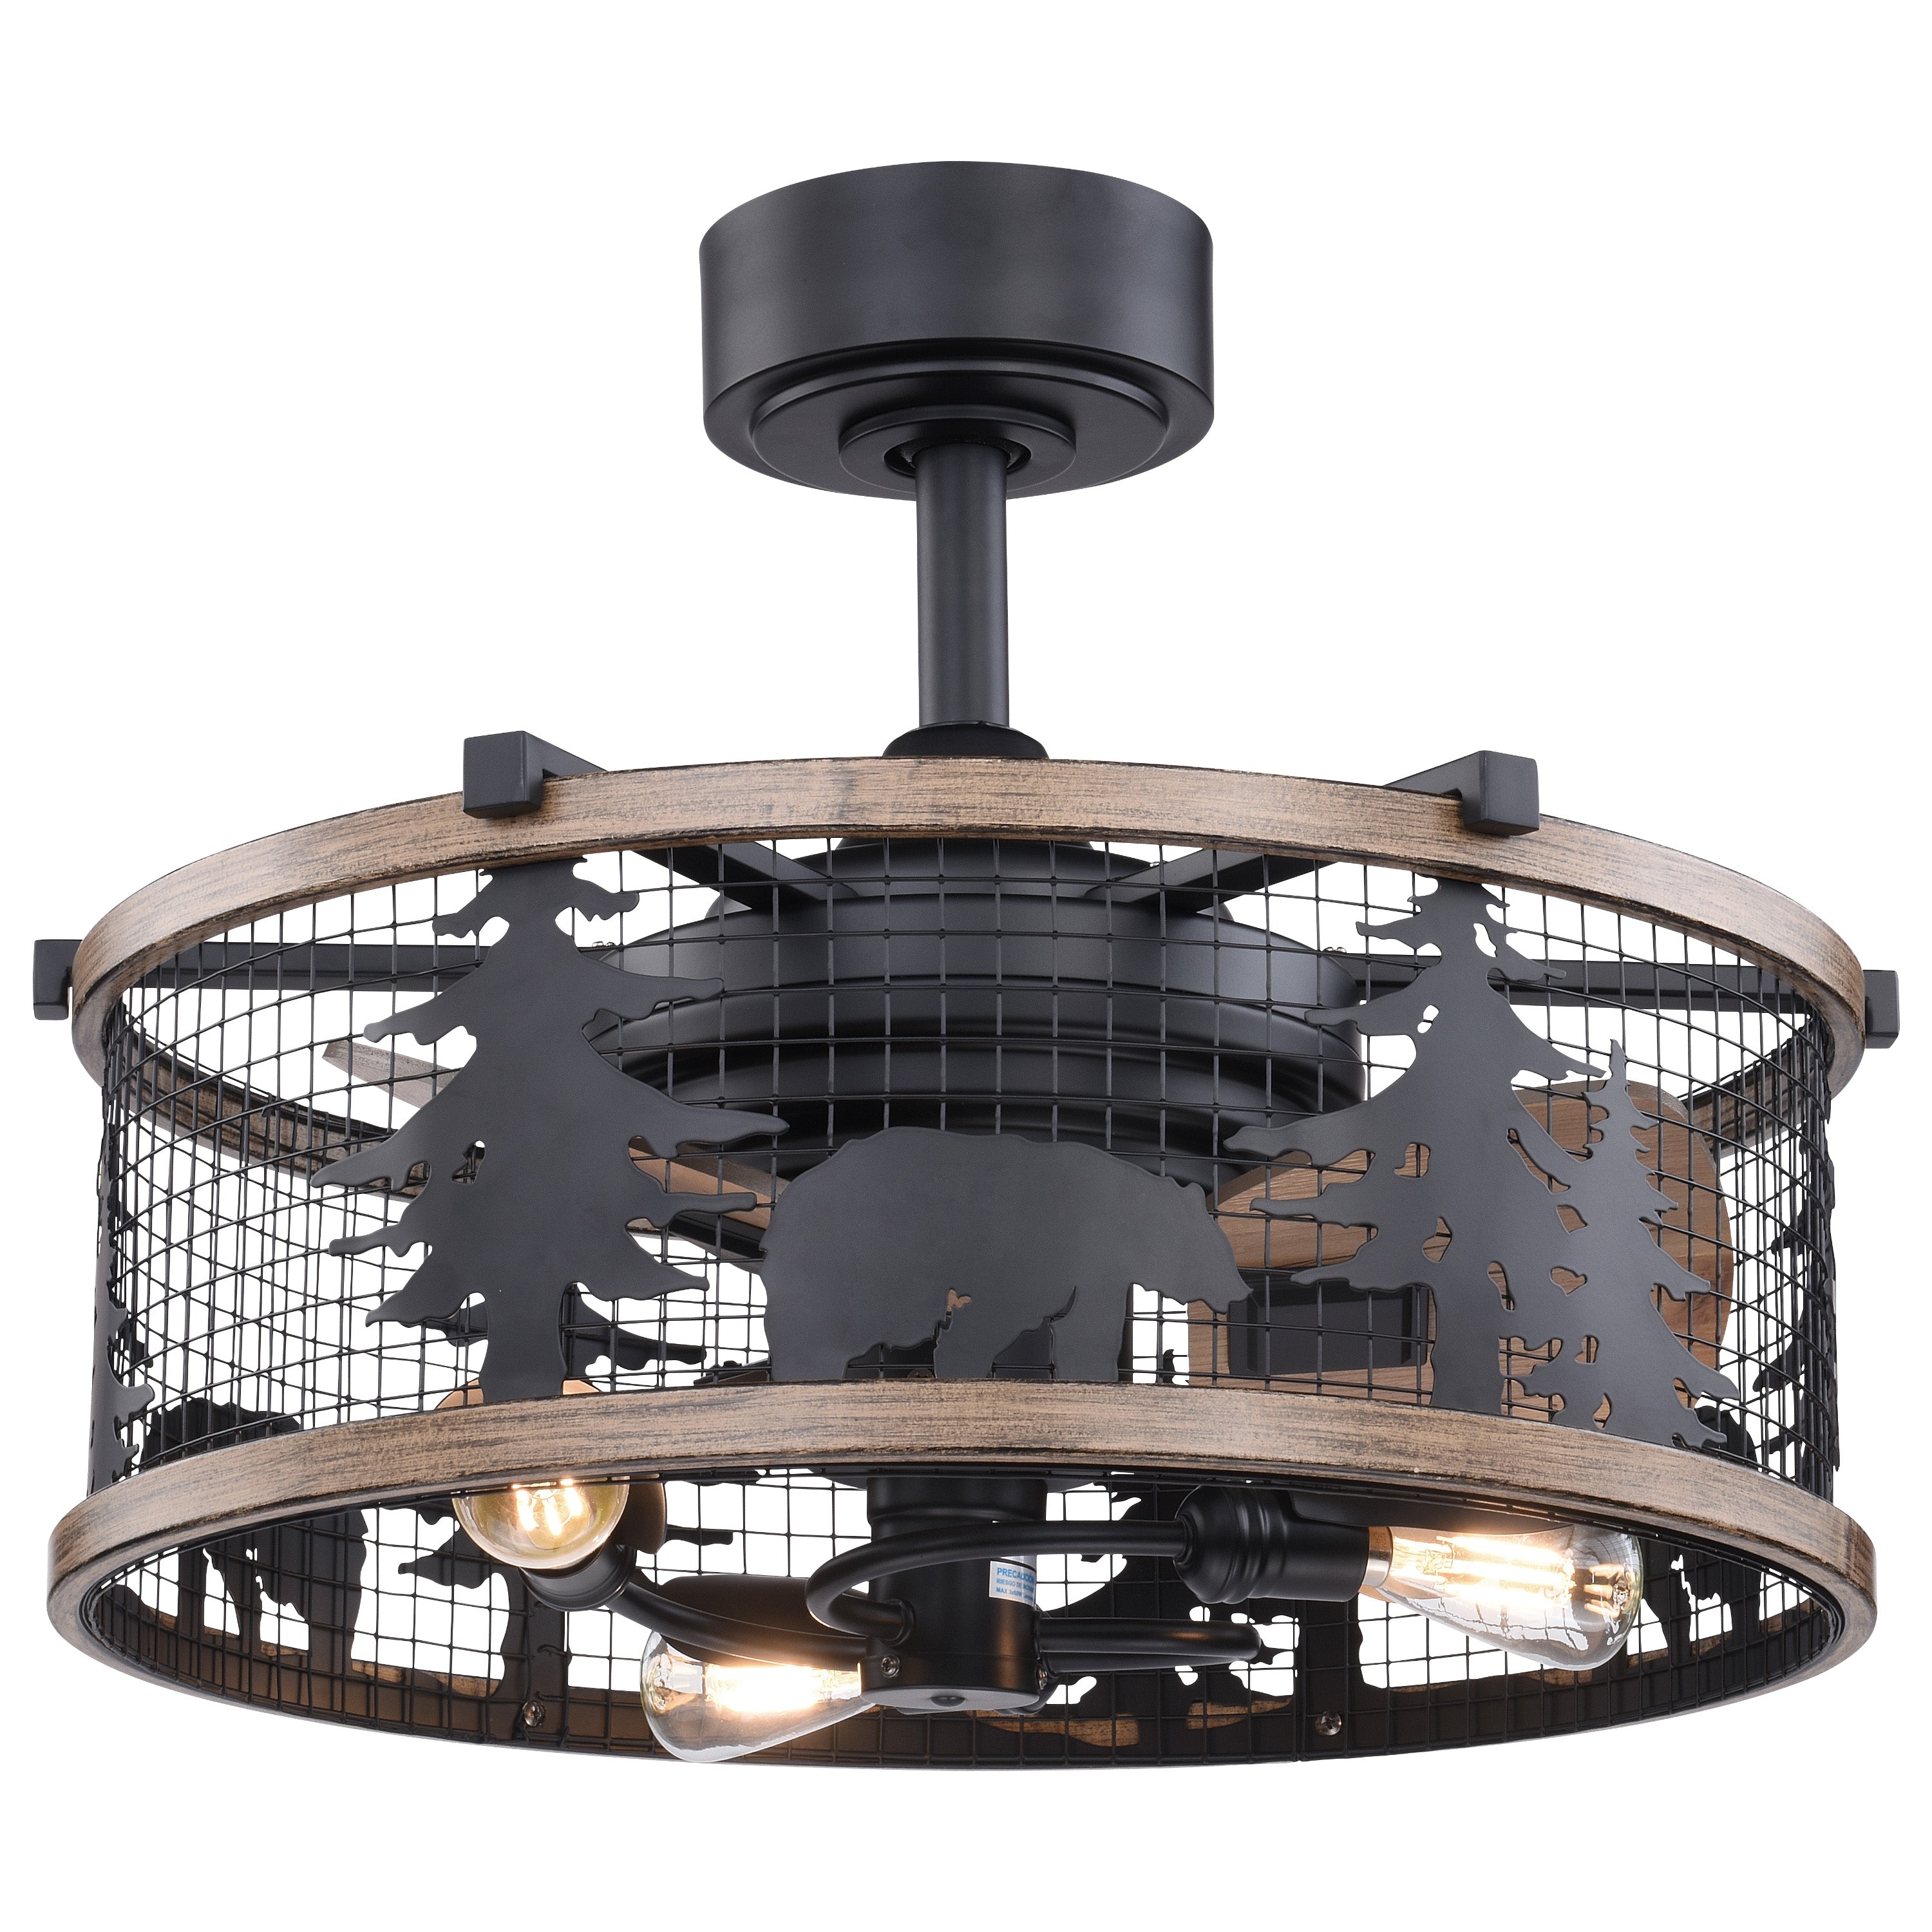 Bear LED Lantern Lights Decorative - Metal Round Holder Hanging Lantern for  Indoor Outdoor by Pine Ridge